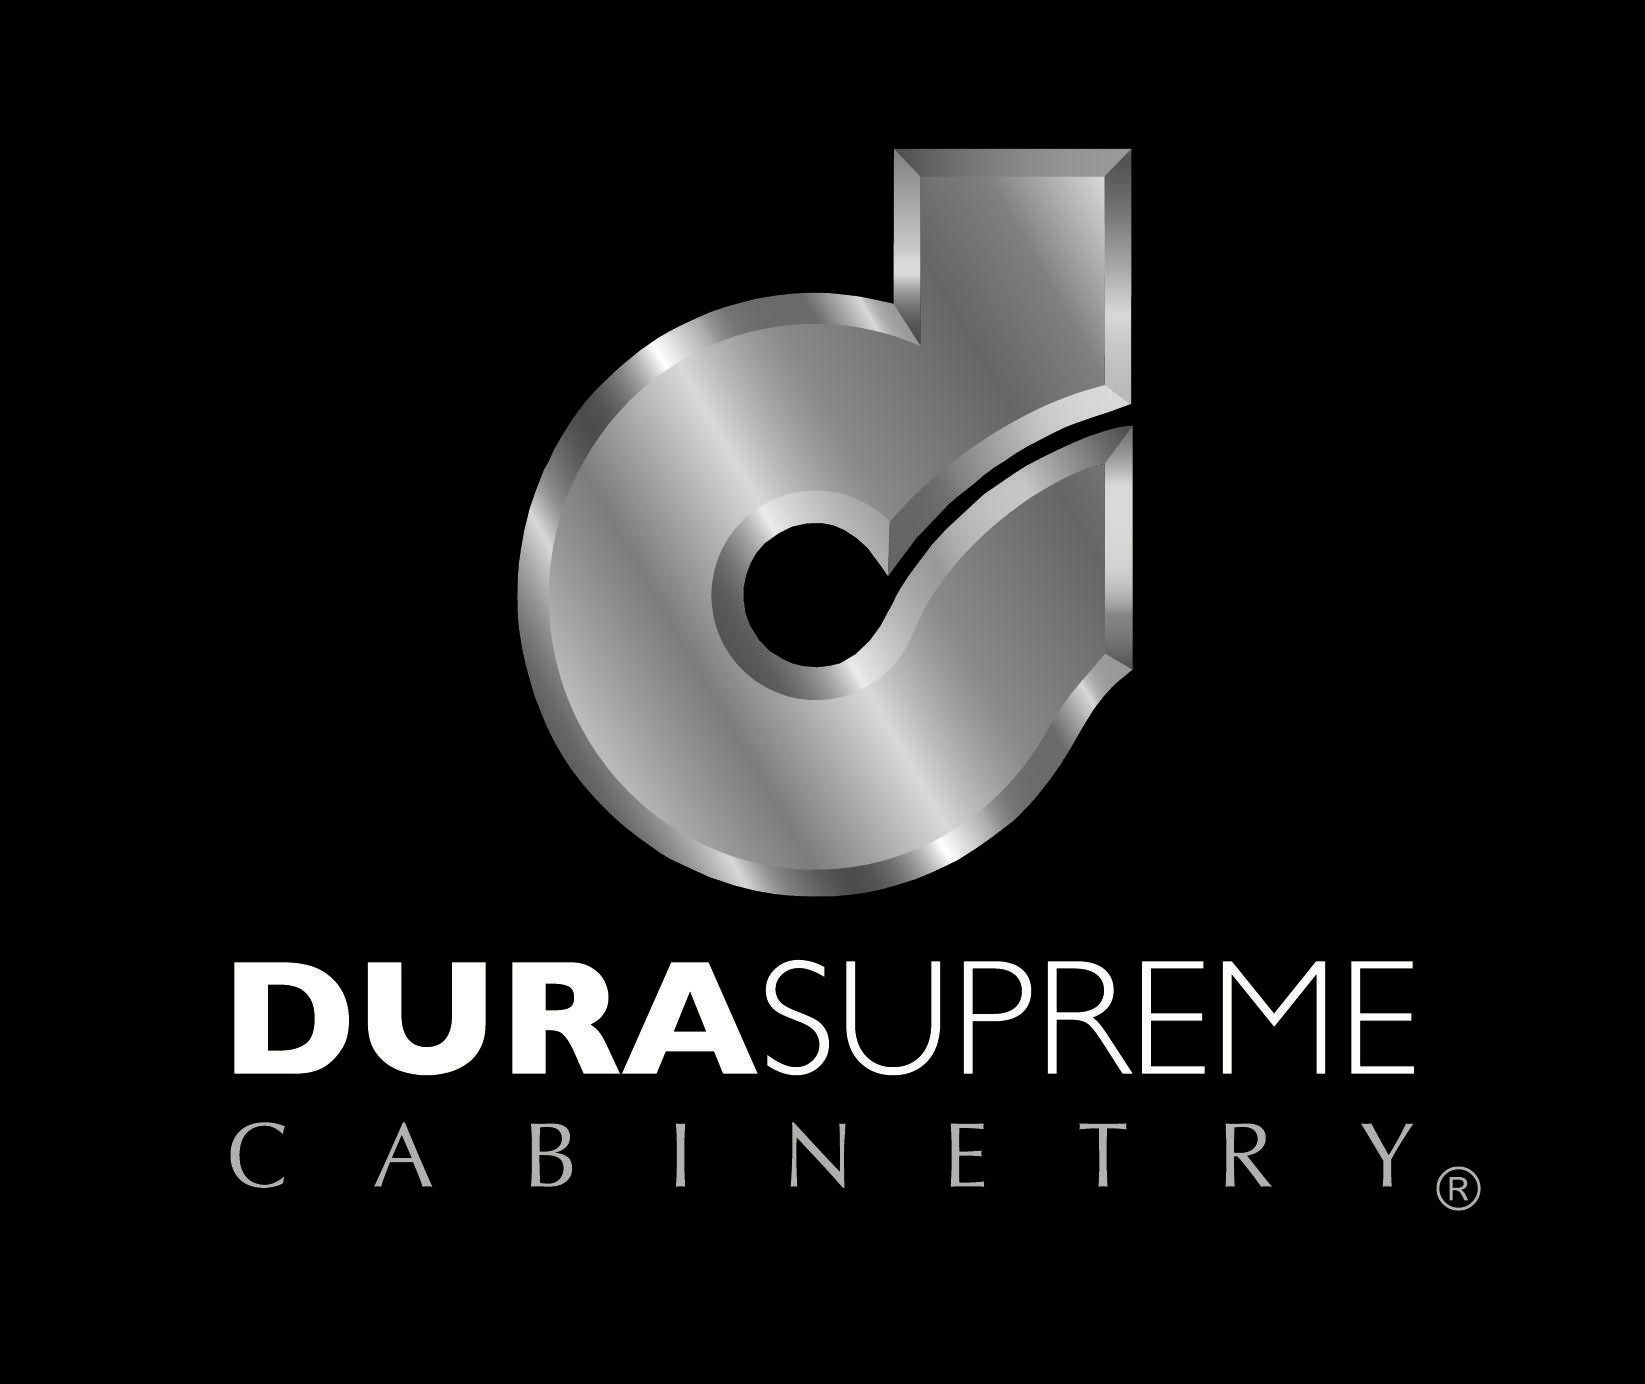 Dura Supreme Logo - Logo Files. Dura Supreme Cabinetry. Dura Supreme Cabinetry